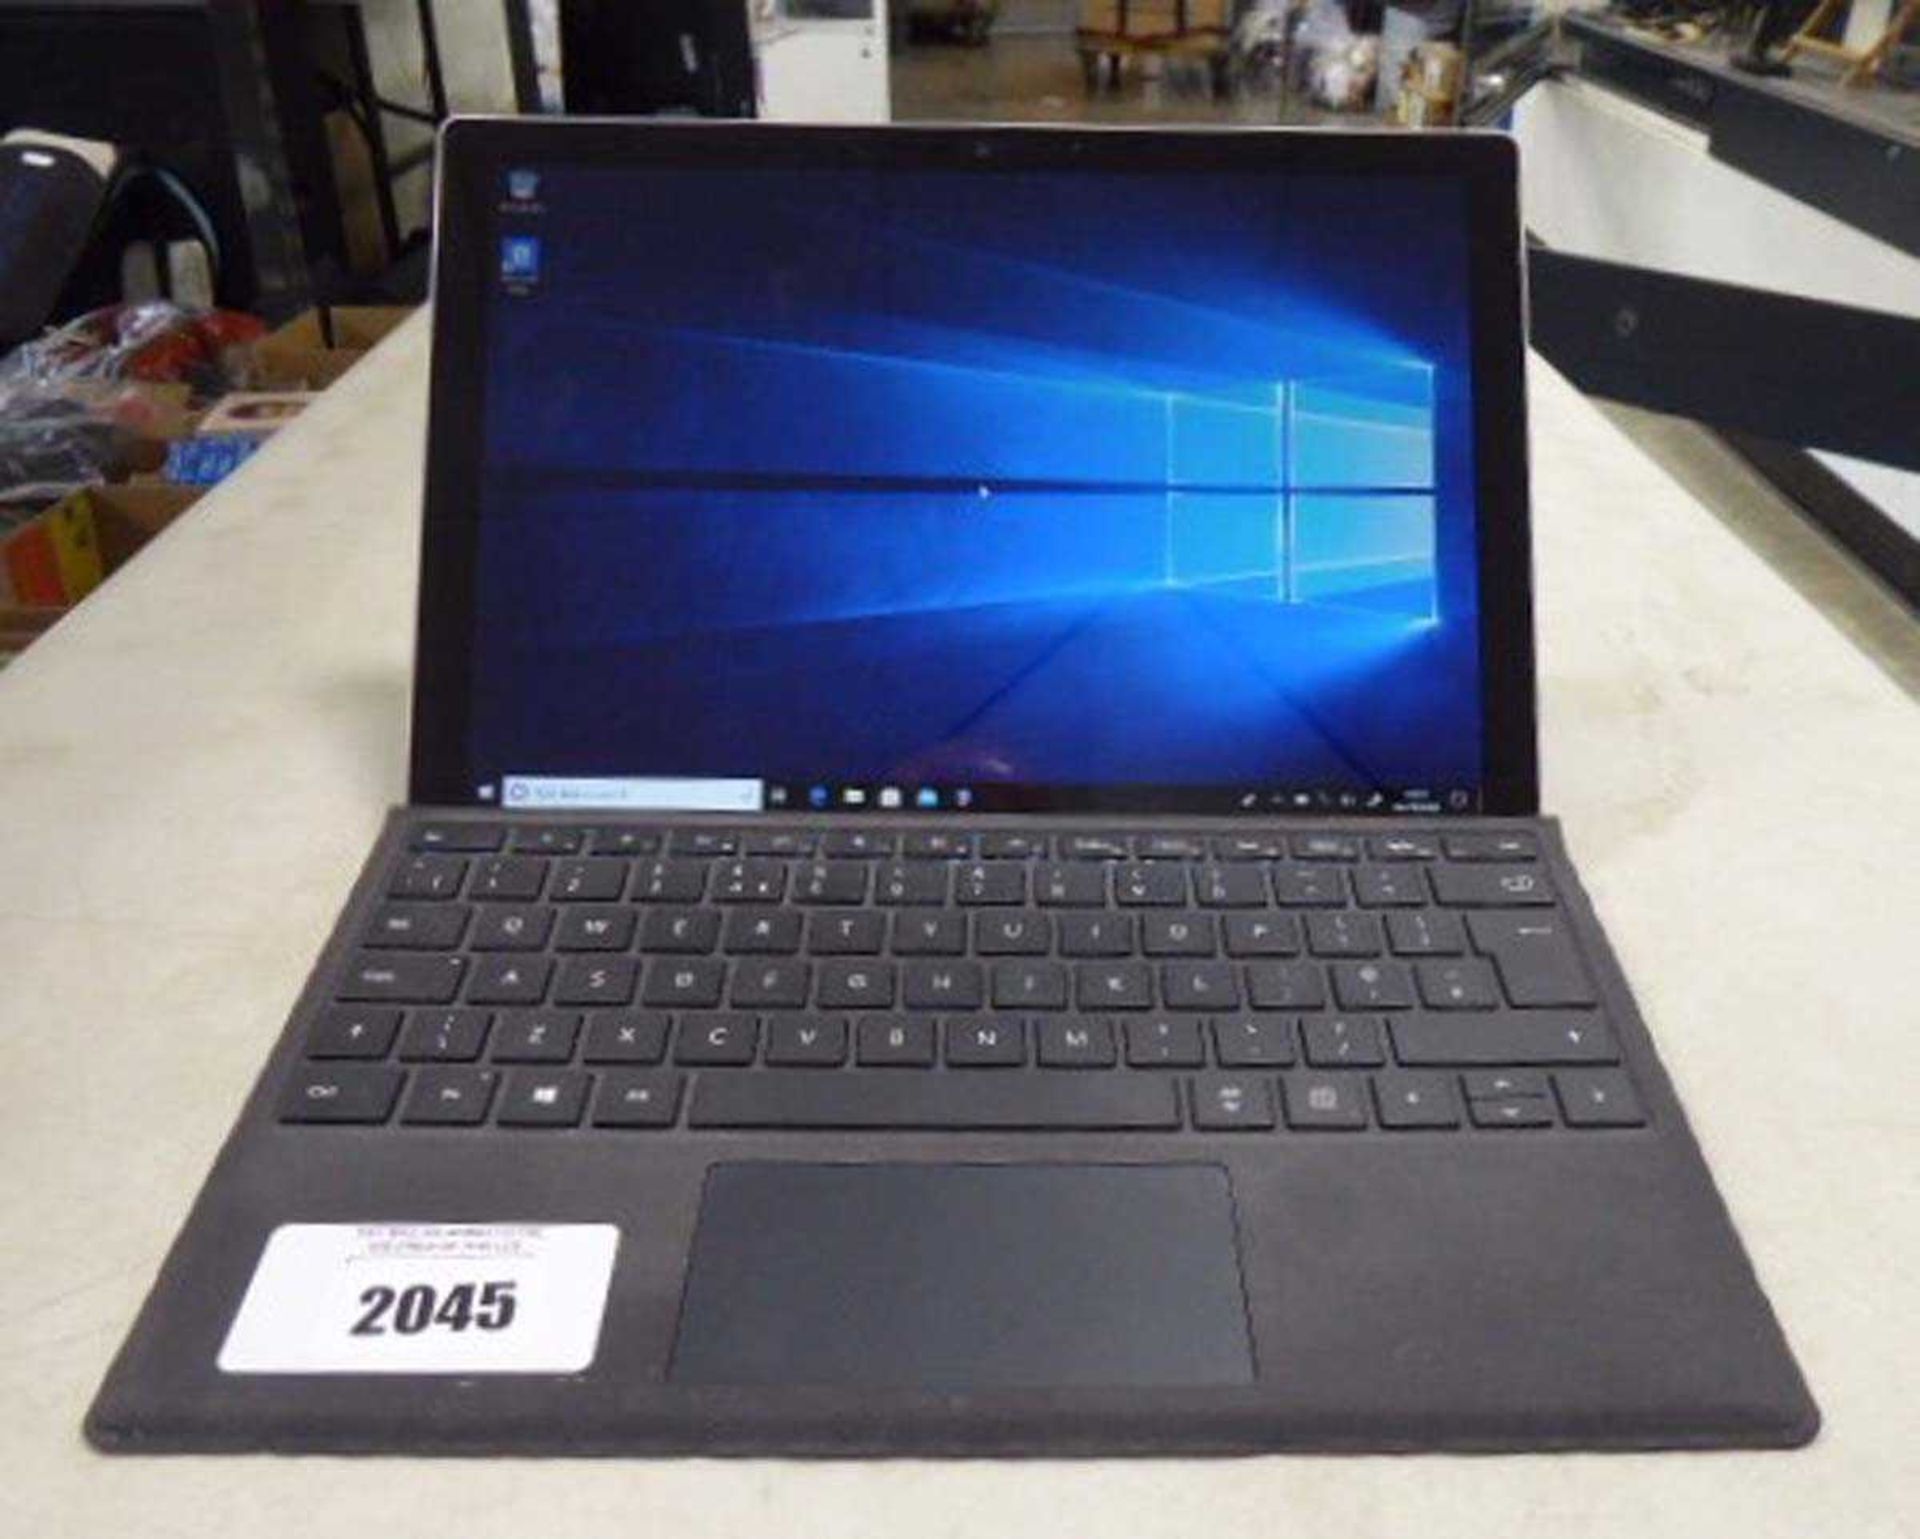 +VAT Microsoft Surface Pro 1796 tablet with keyboard. Intel i5 7th generation processors, 8GB RAM,